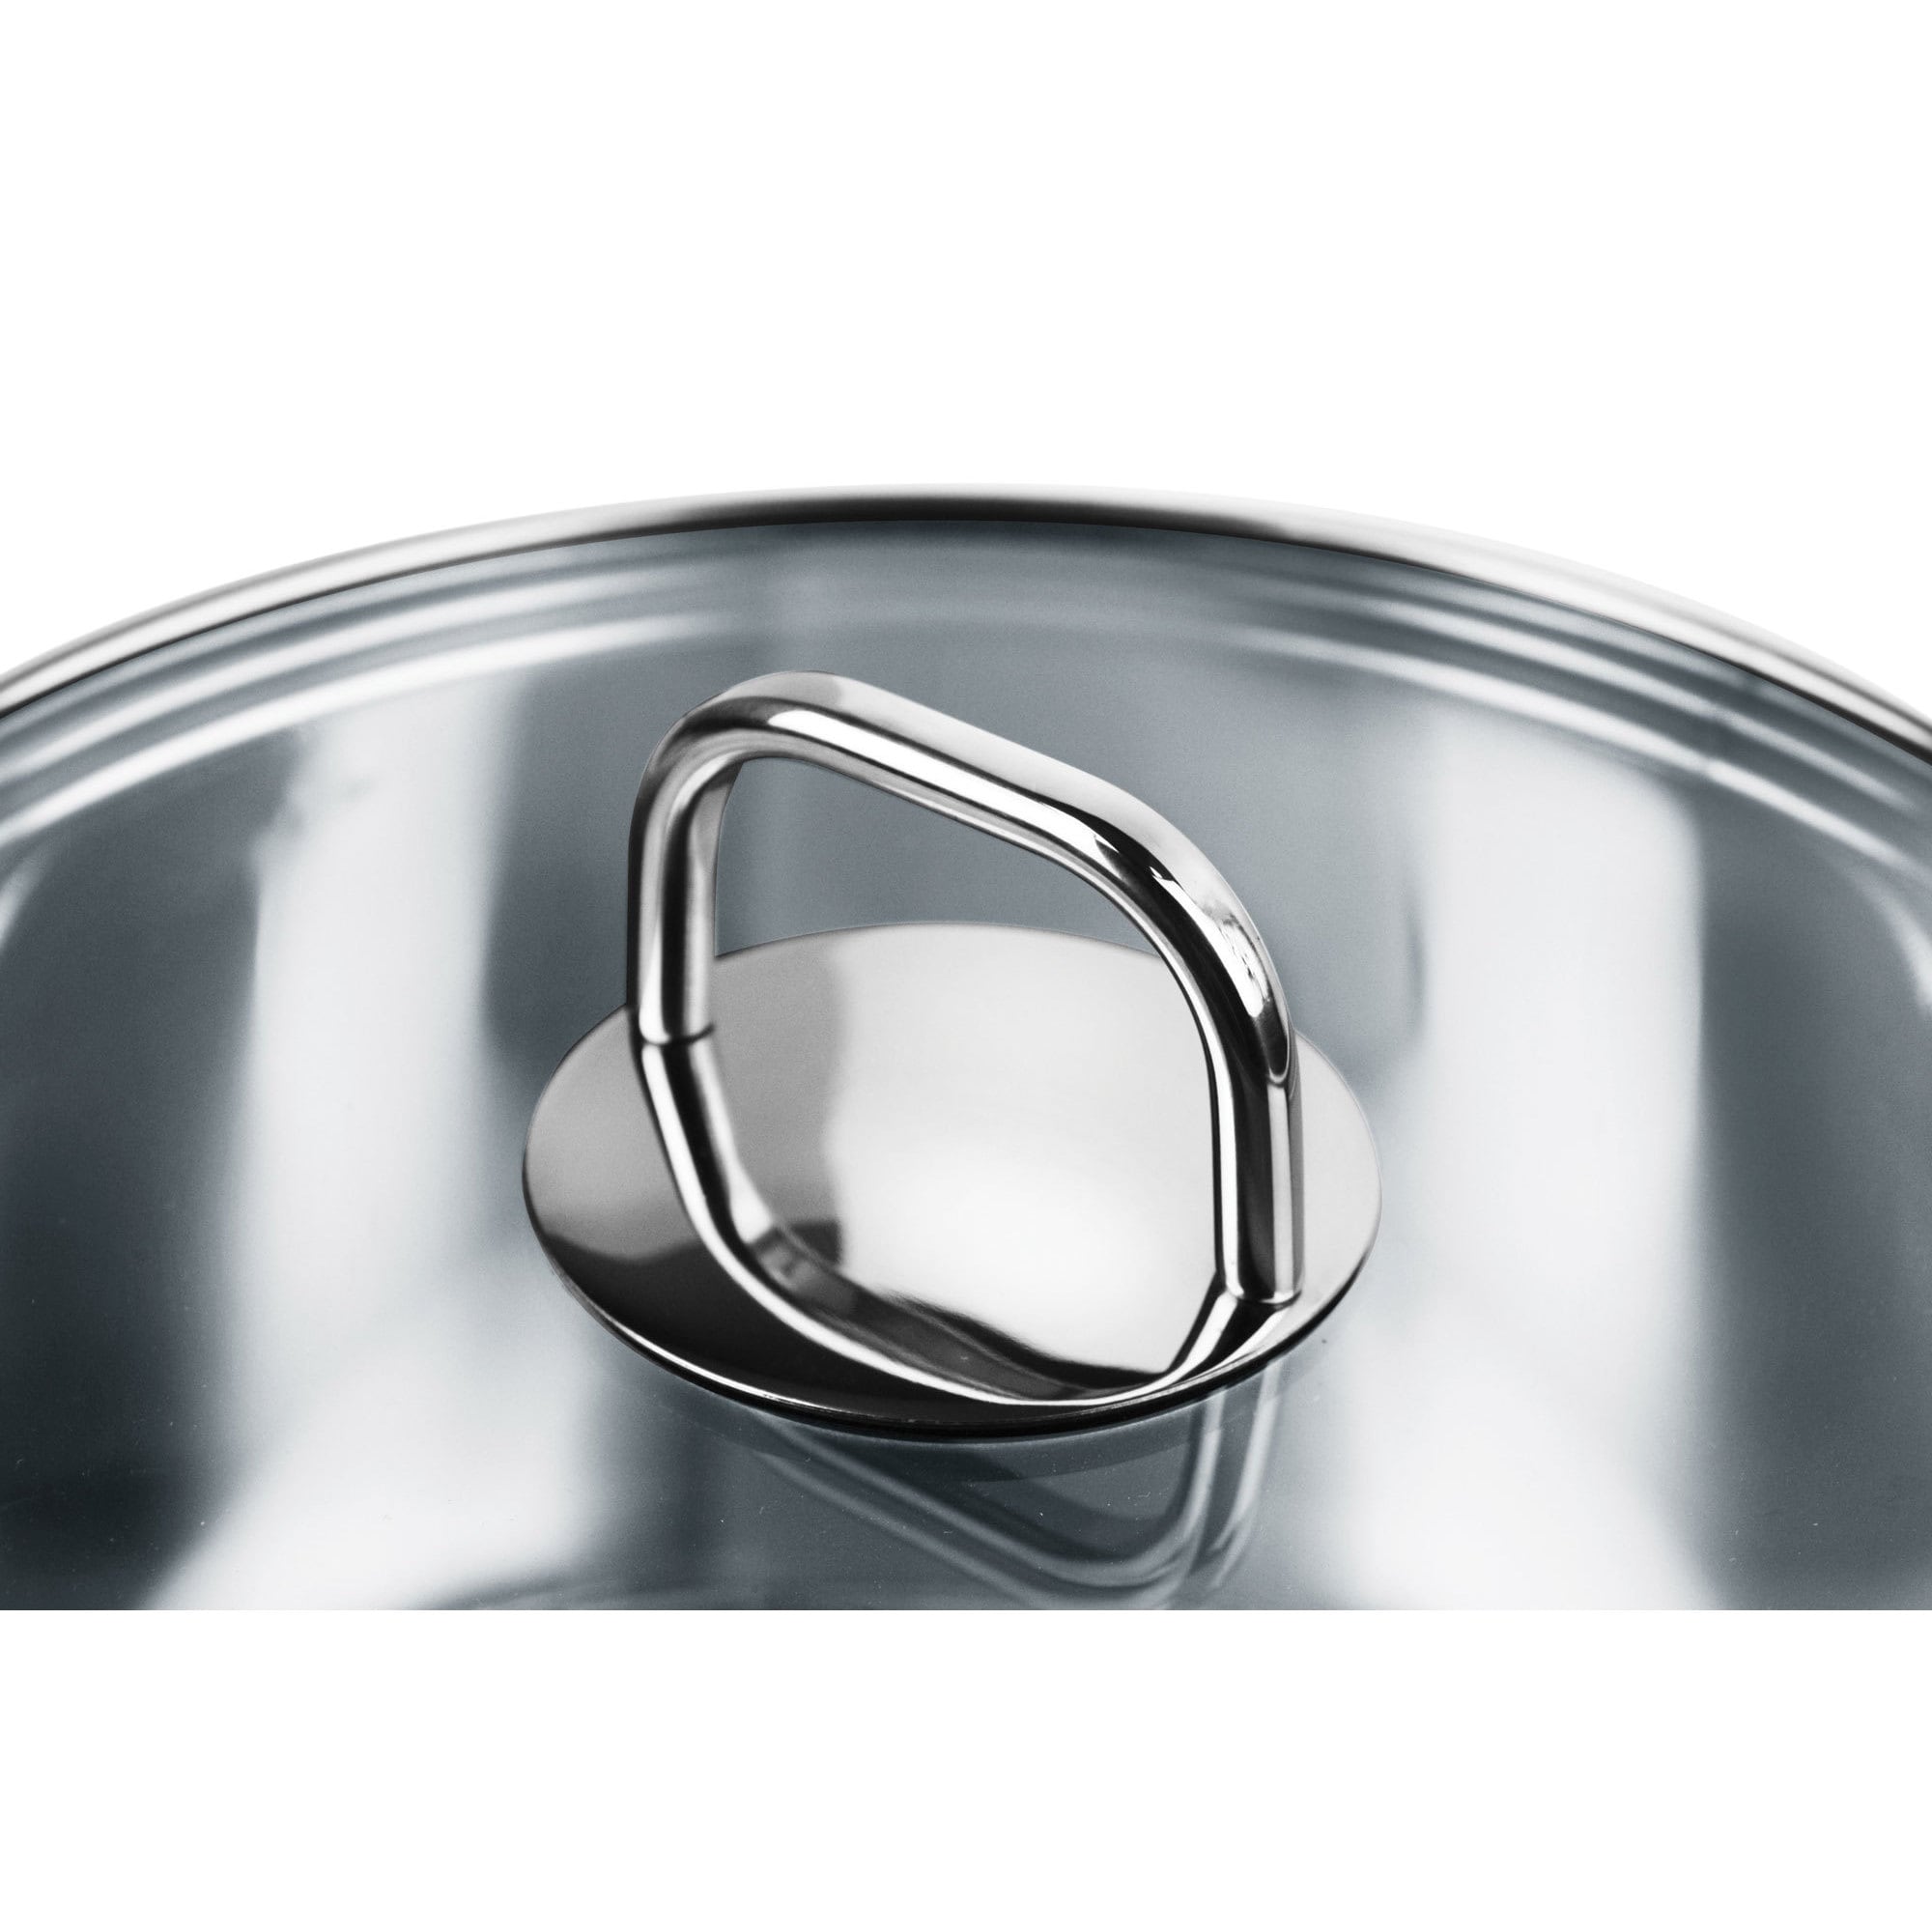 WMF Inspiration Stainless Steel Cookware 11-piece Set - Bed Bath & Beyond -  10442853